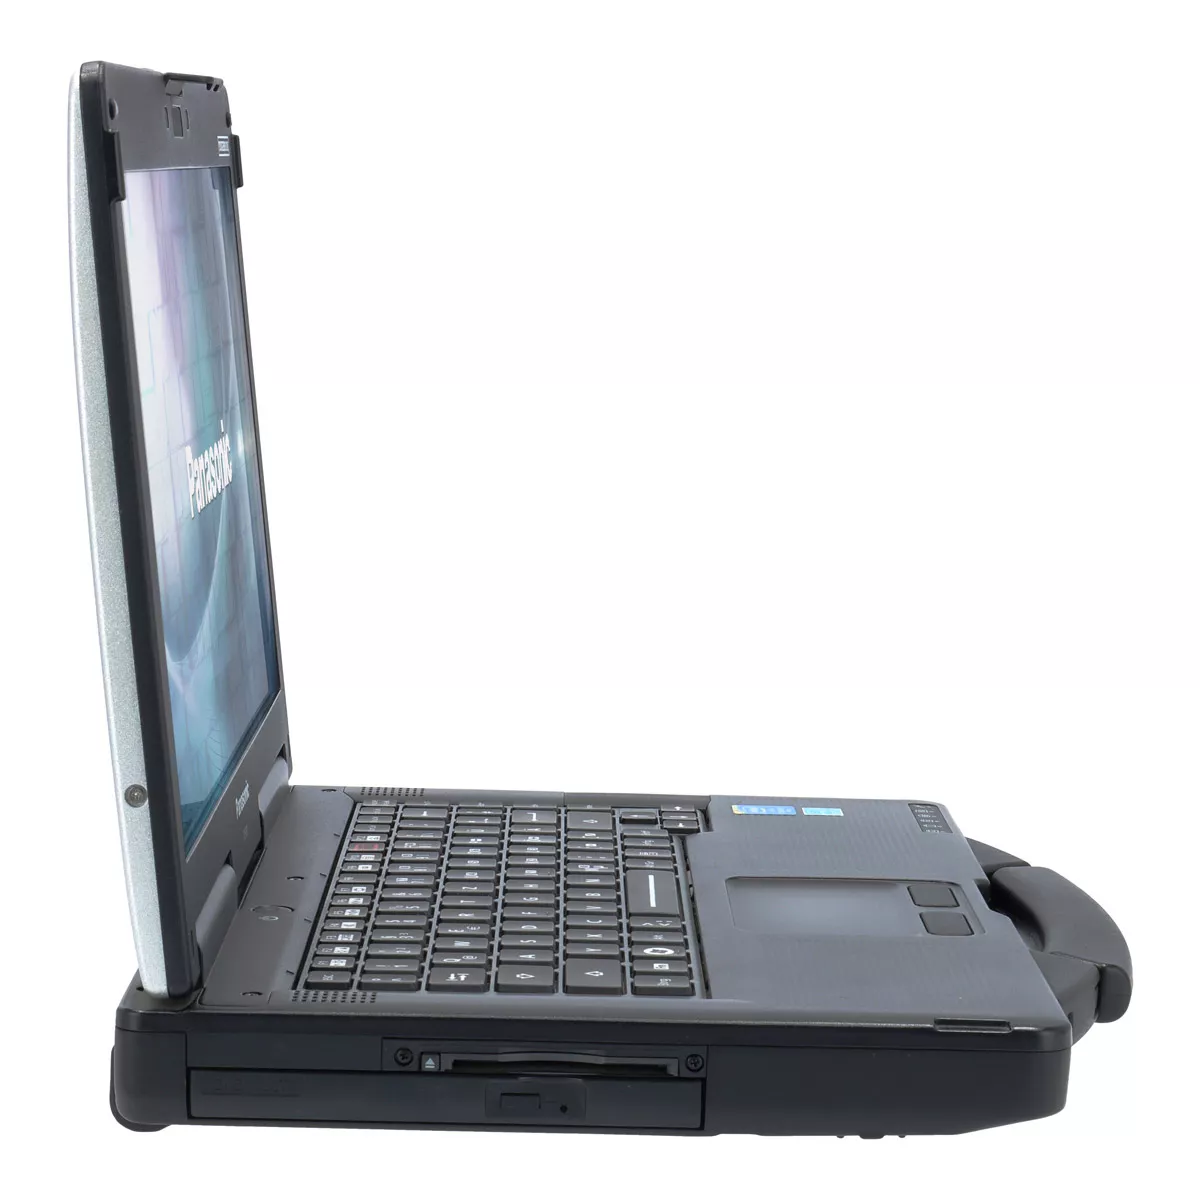 Outdoor Notebook Panasonic Toughbook CF-53 Core i5 4310U 2,0 GHz B